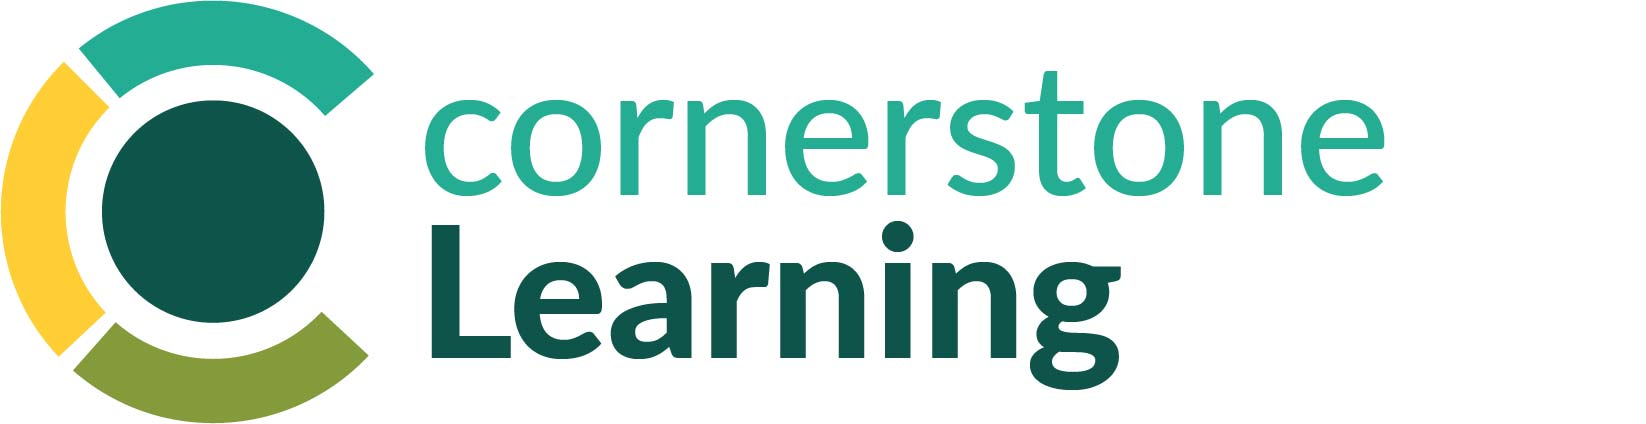 Cornerstone learning logo